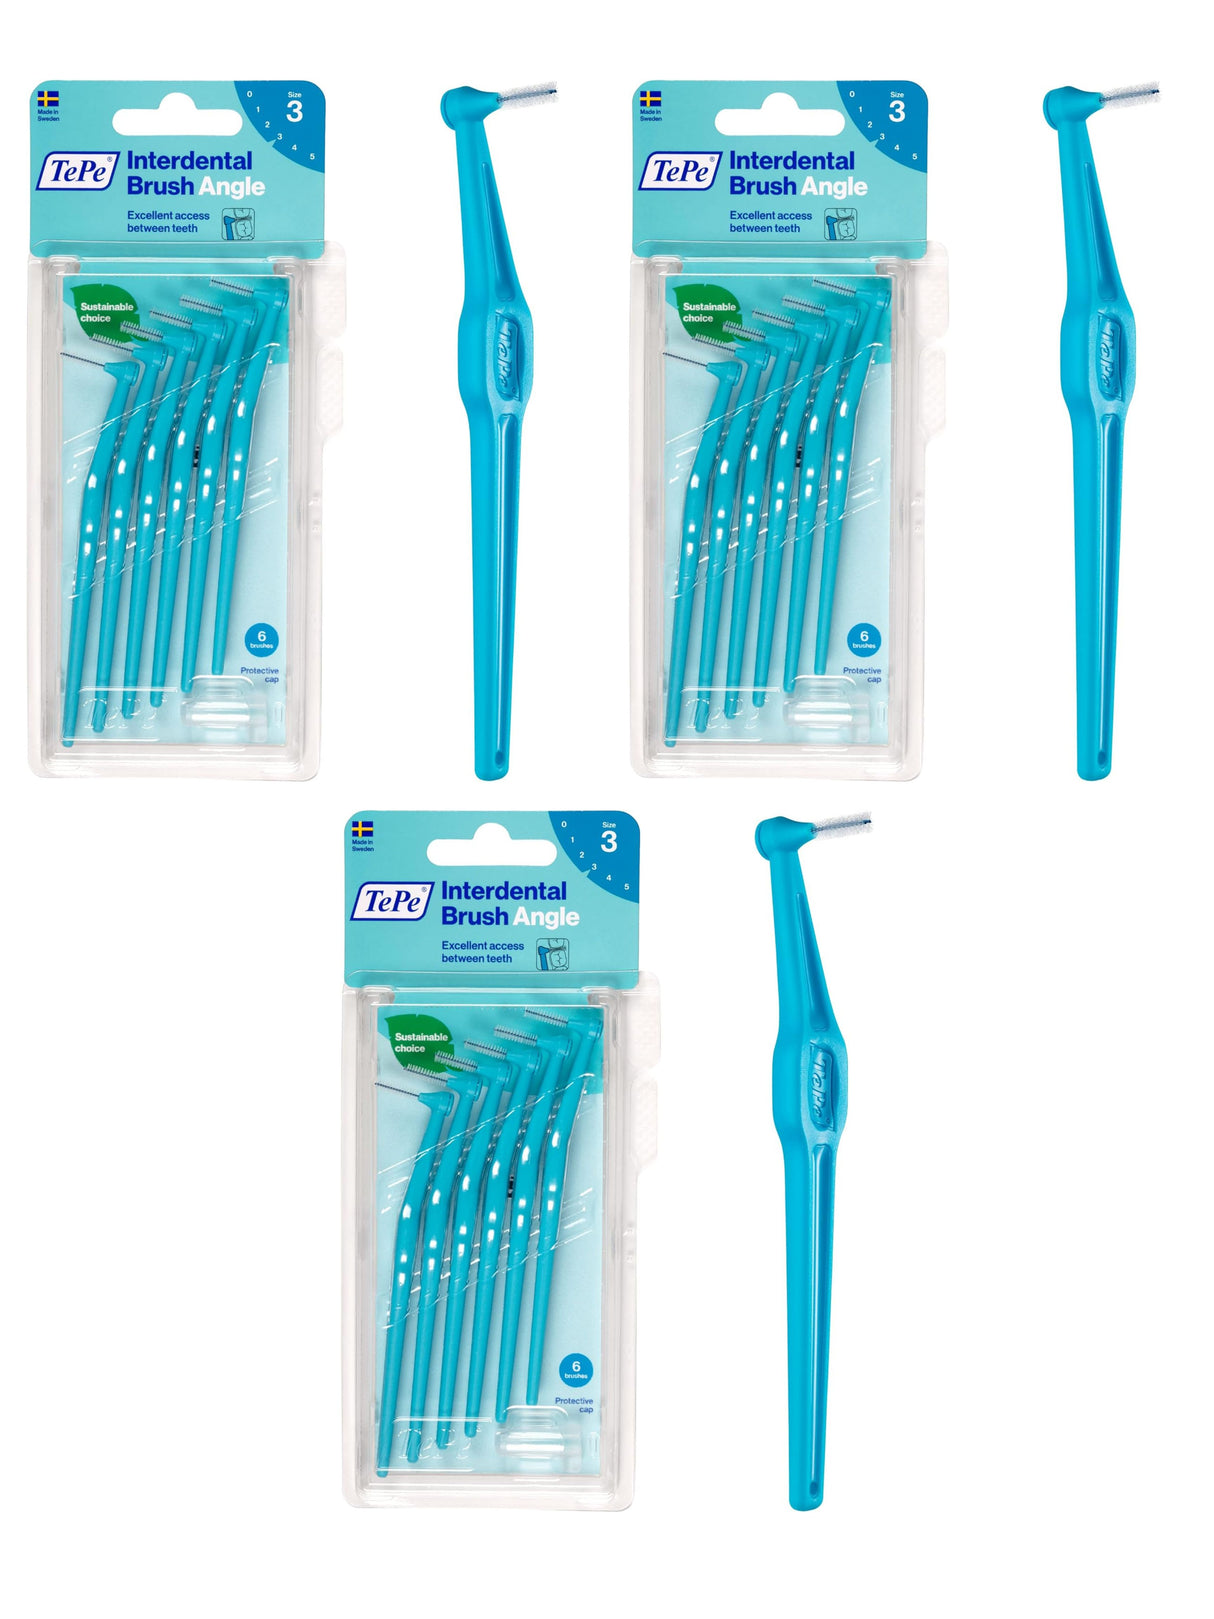 TePe Angle Interdental Brushes Blue 0.6mm (Size 3) 6 Pack - 3 Pack Bundle (18 brushes)